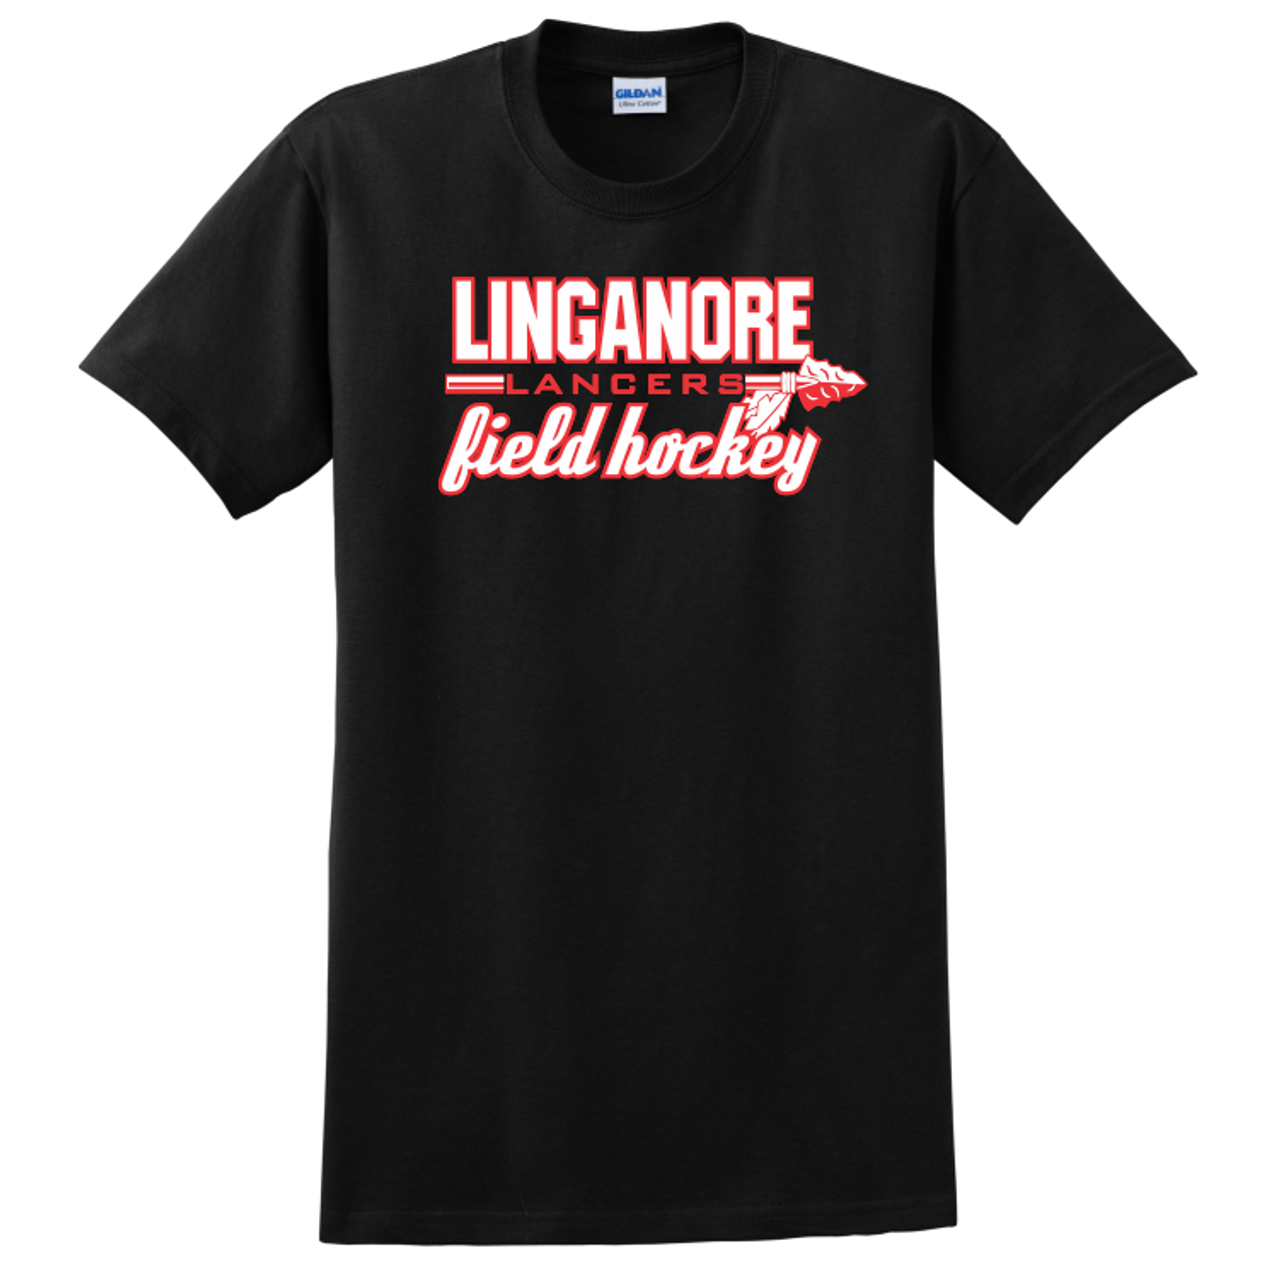 Linganore Lancers FH Cotton Tee, Black